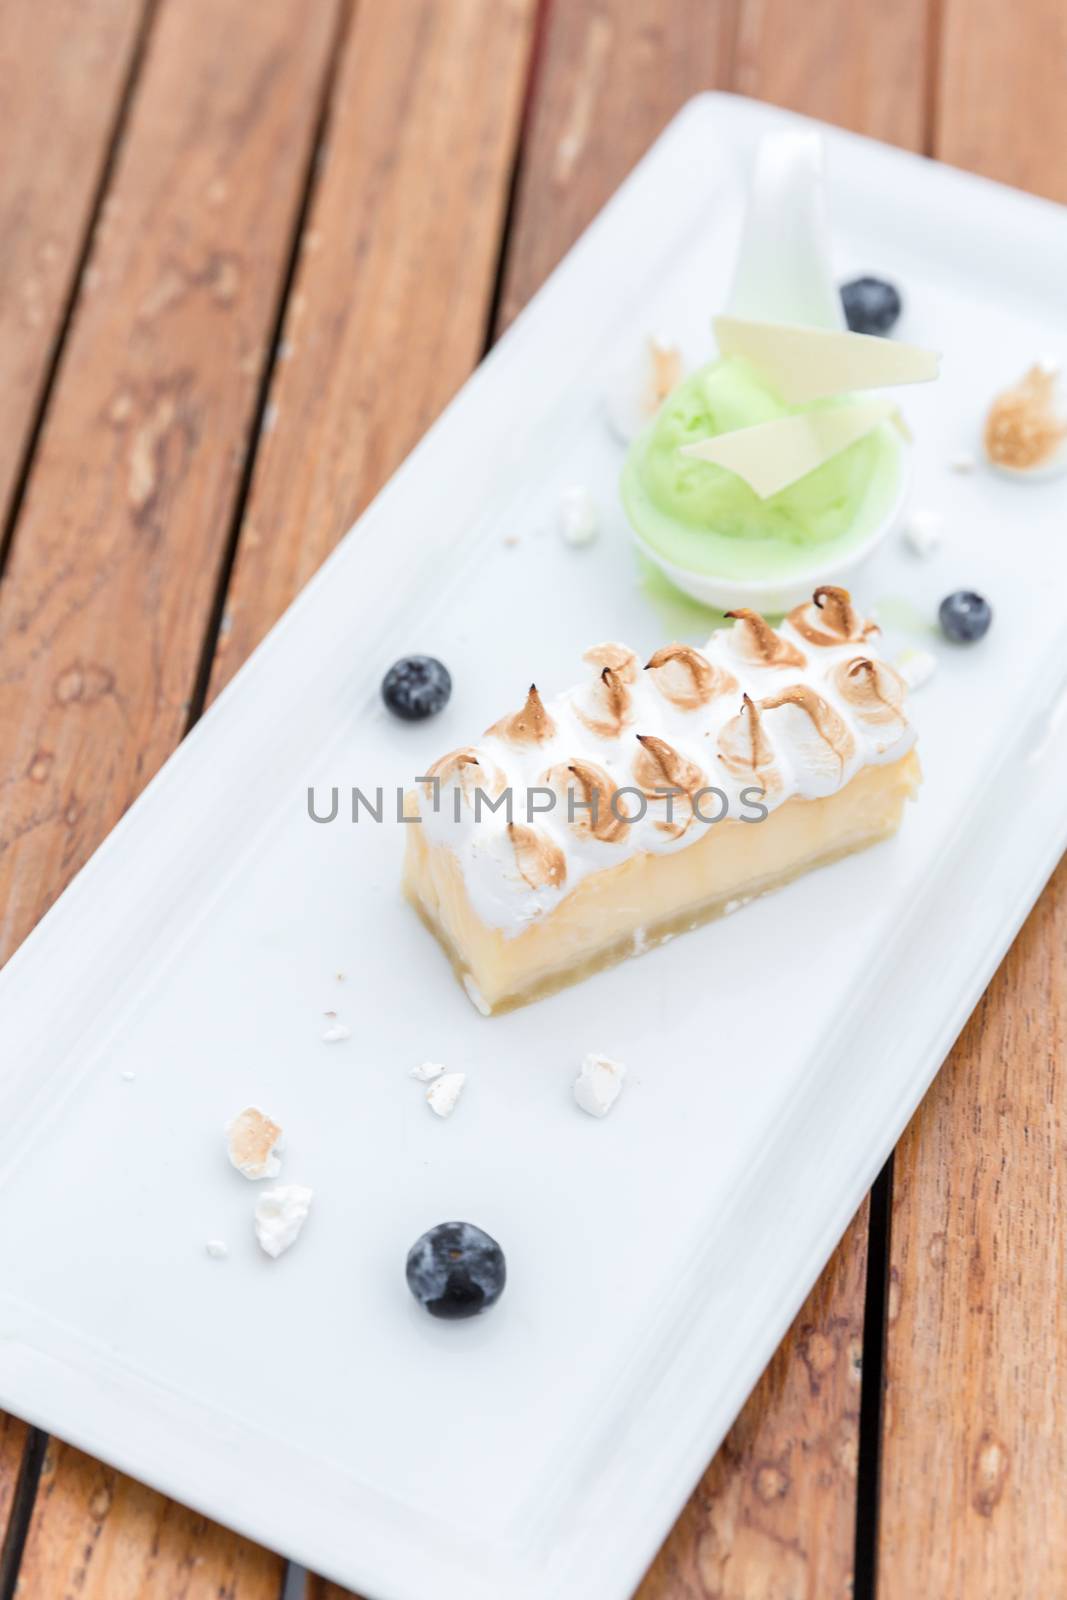 Dessert - Cheesecake by vichie81